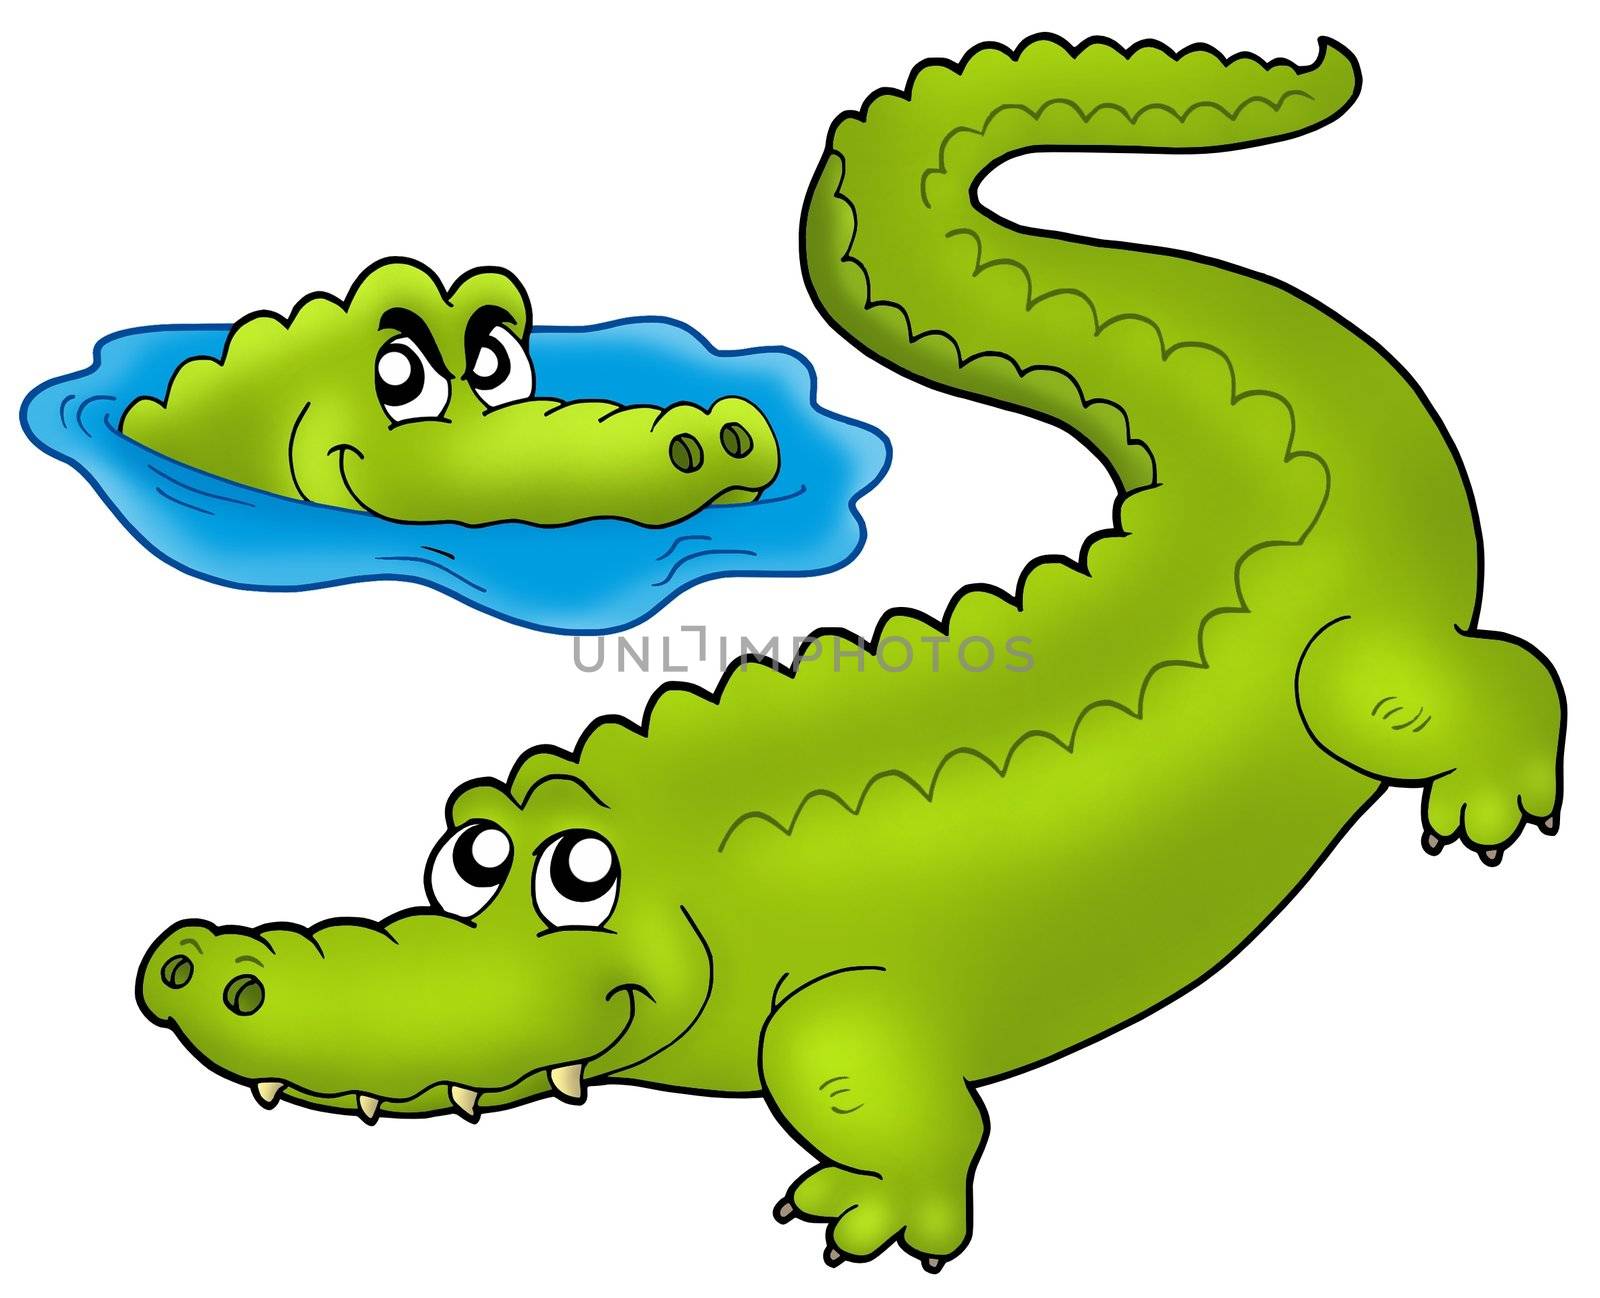 Pair of cartoon crocodiles by clairev